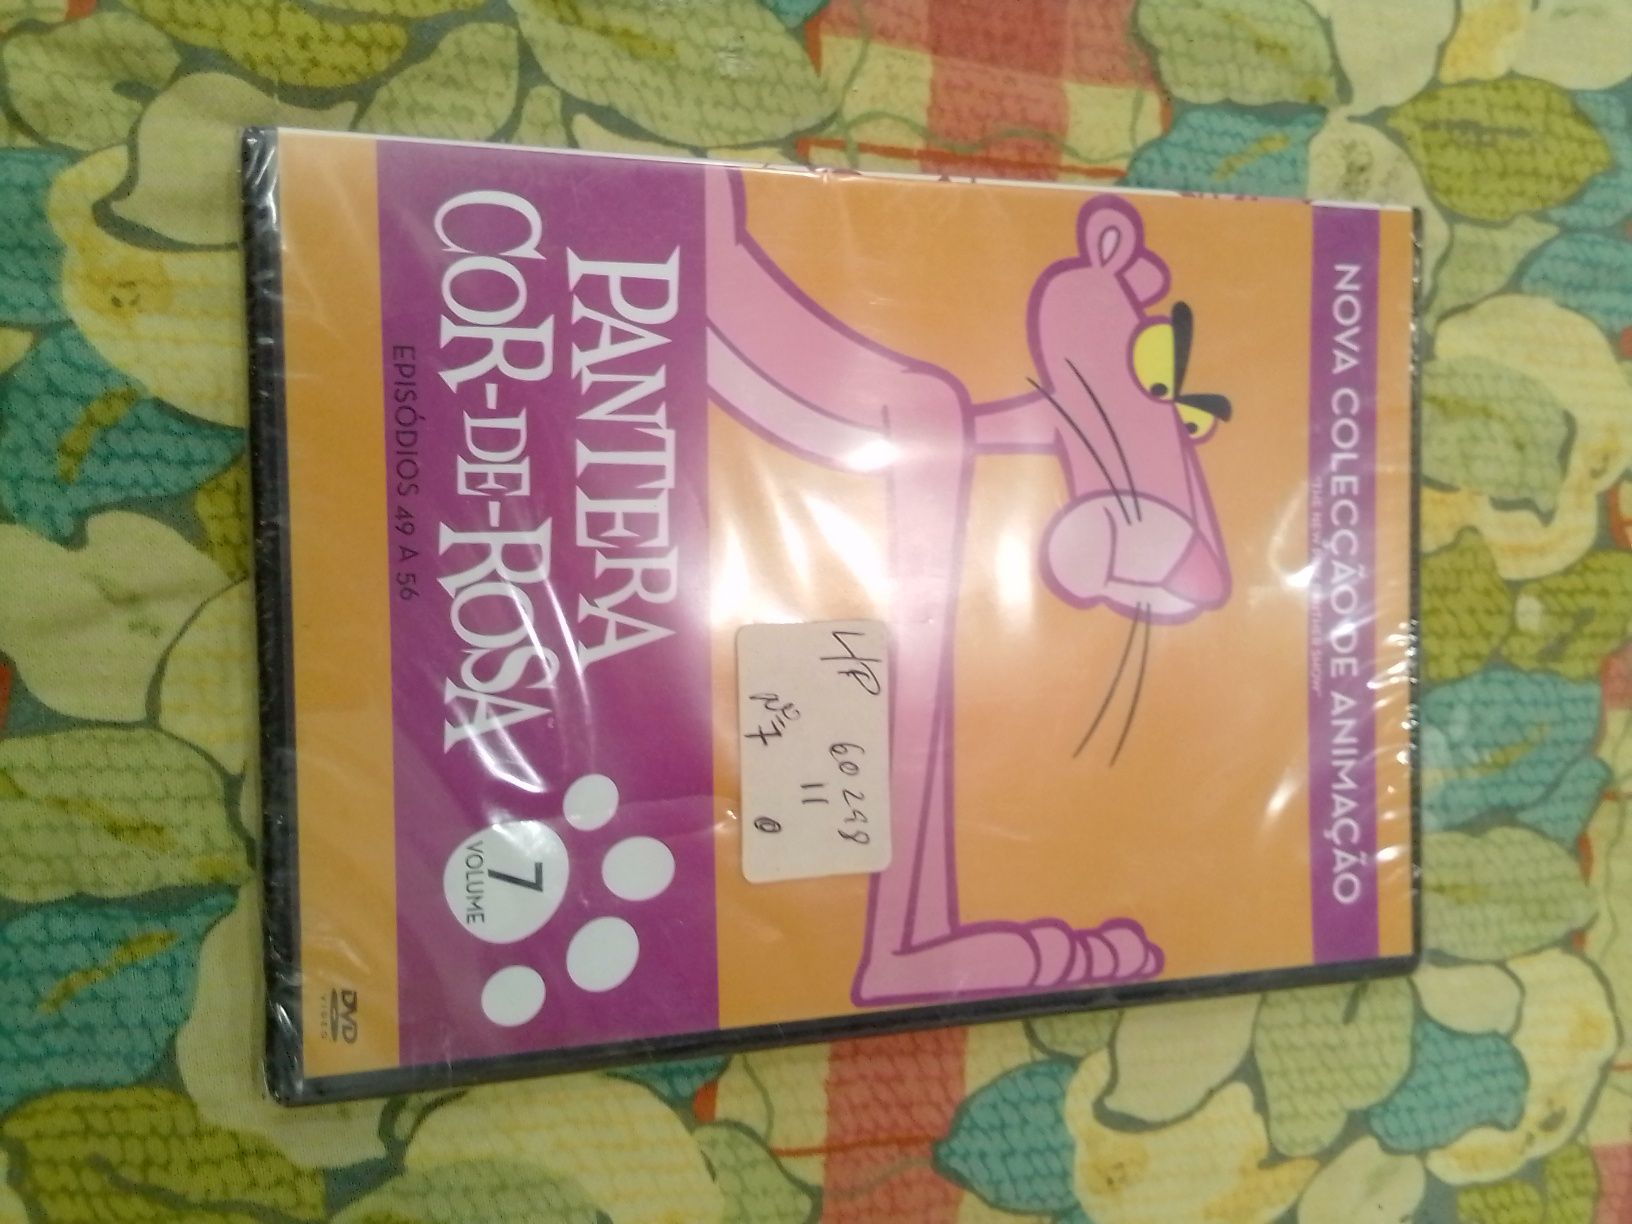 DVD pantera cor de rosa novo embalado vol 7 3€